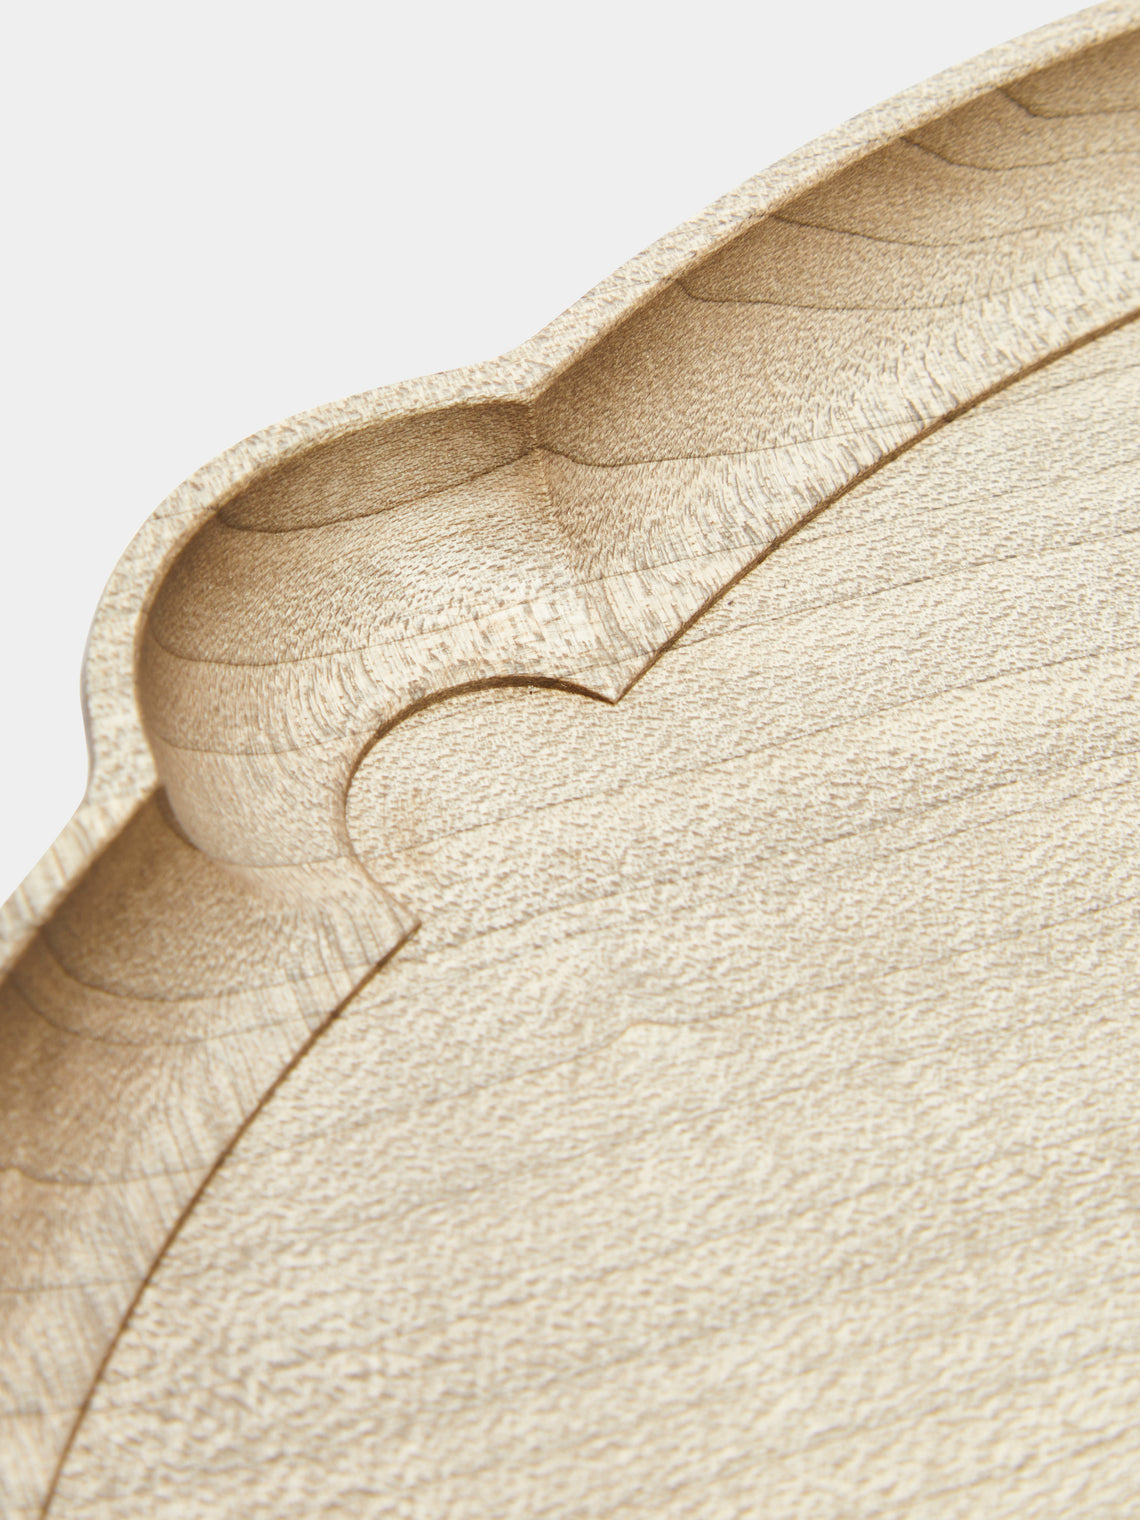 Ifuji - Italian Hand-Carved Wood Small Tray - Brown - ABASK